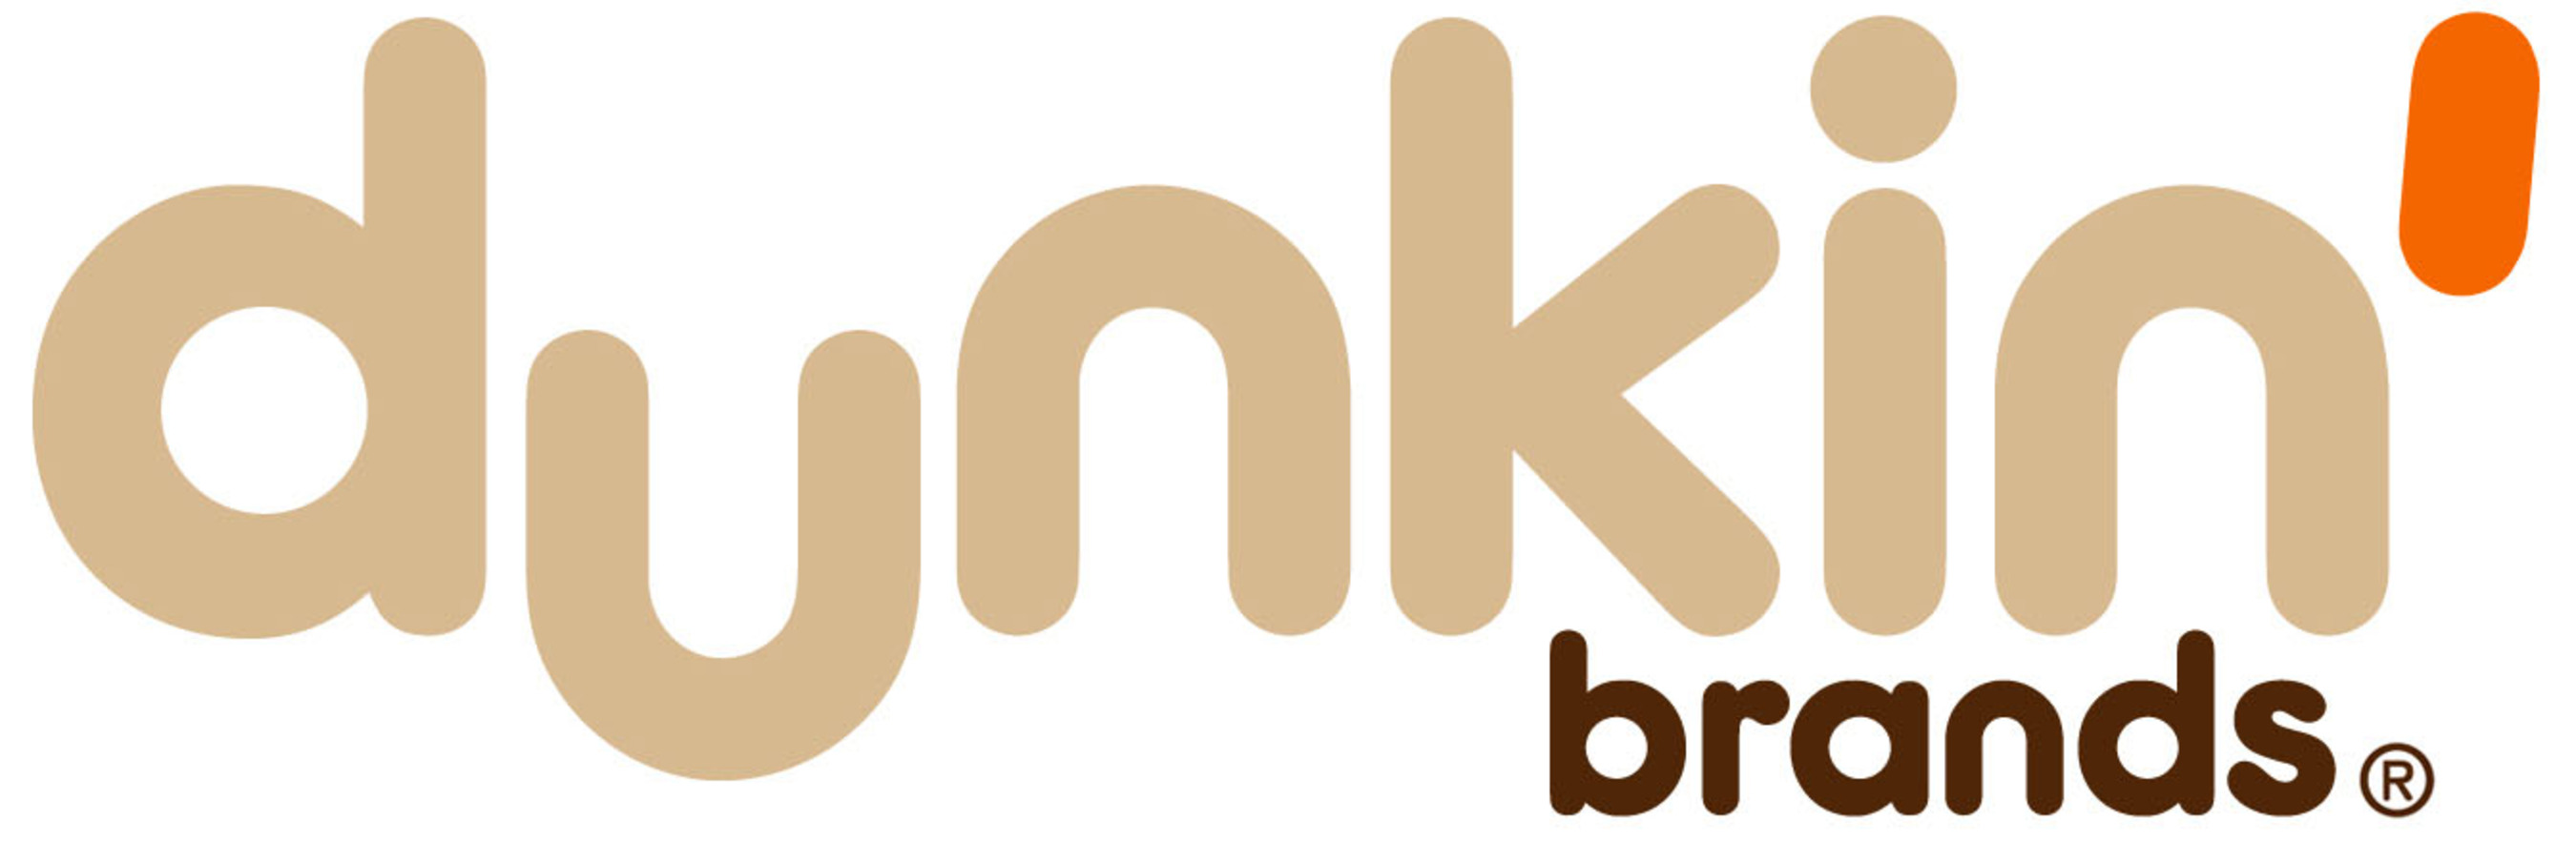 DUNKIN' BRANDS, INC. LOGO. (PRNewsFoto/Dunkin' Brands, Inc.) (PRNewsFoto/)